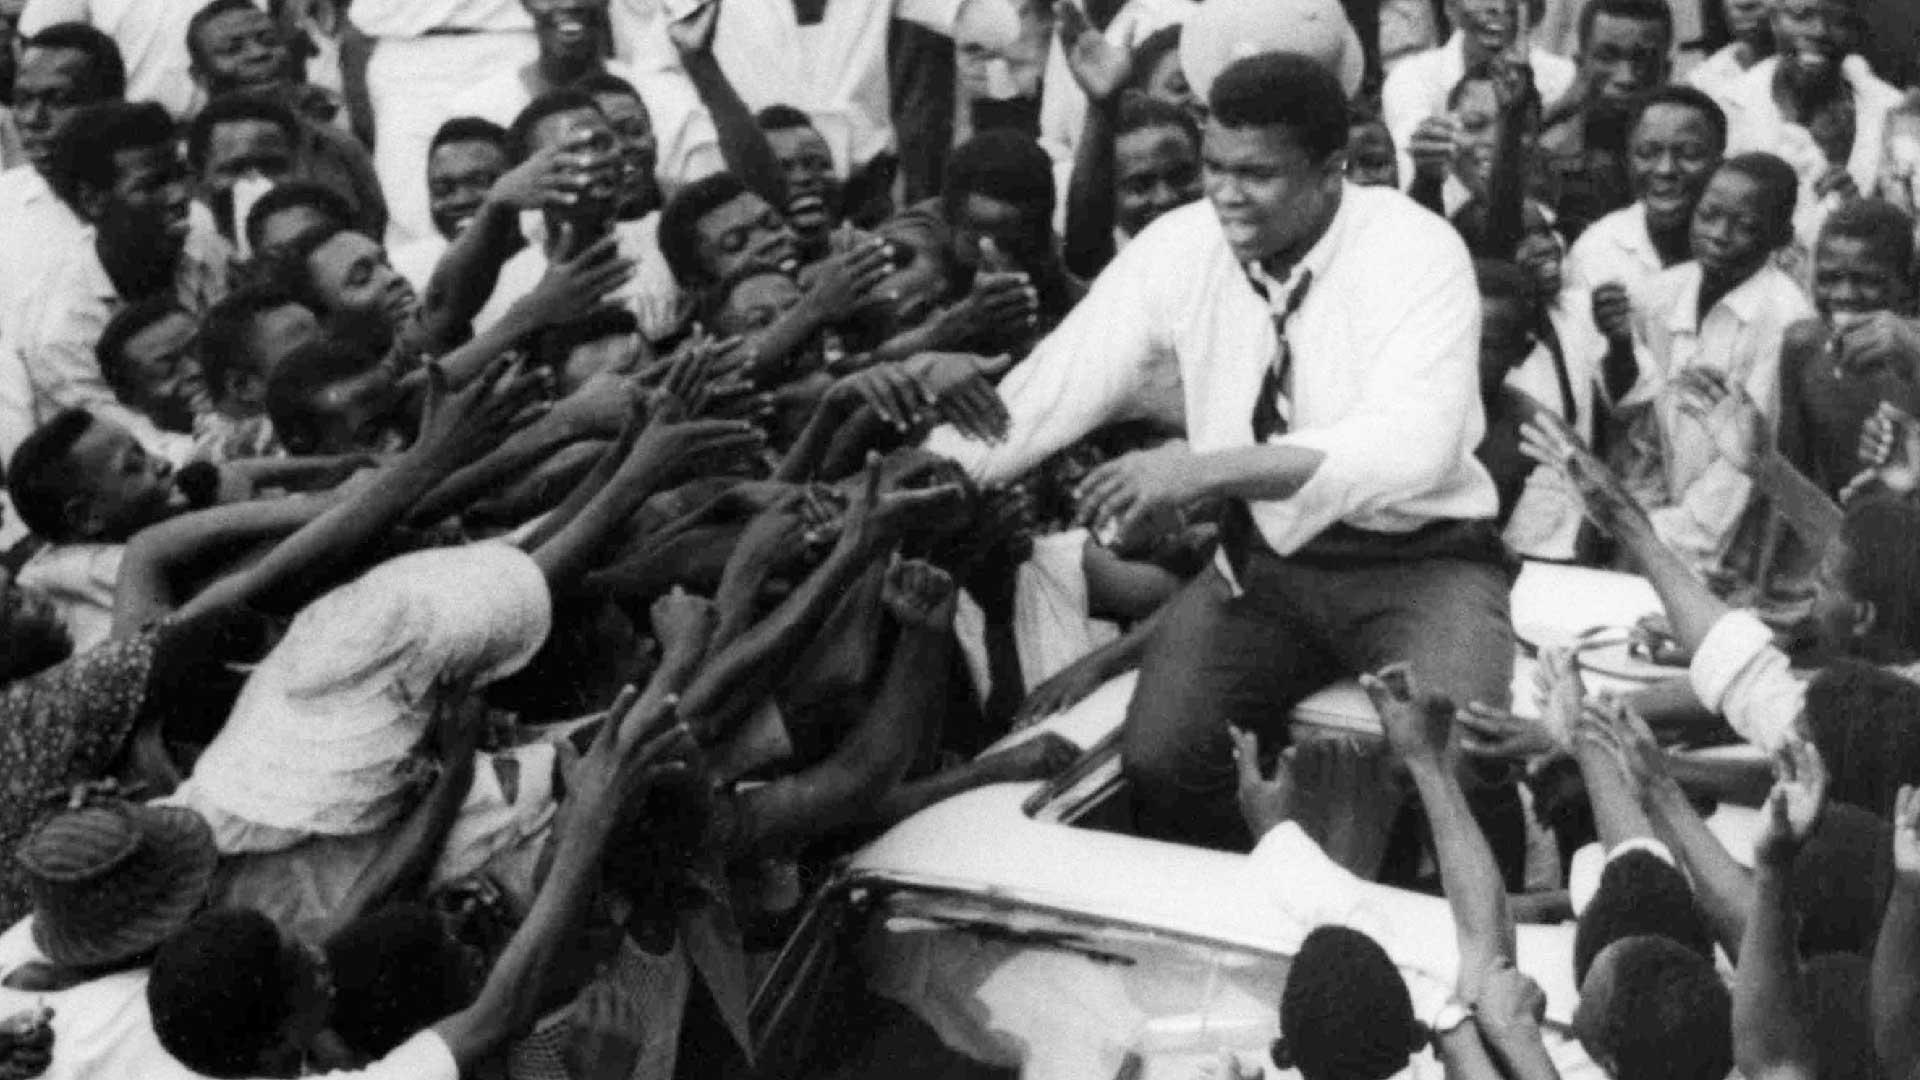 Muhammad Ali, Draft Resister & The Greatest, Dies at 74 - Vietnam Full  Disclosure